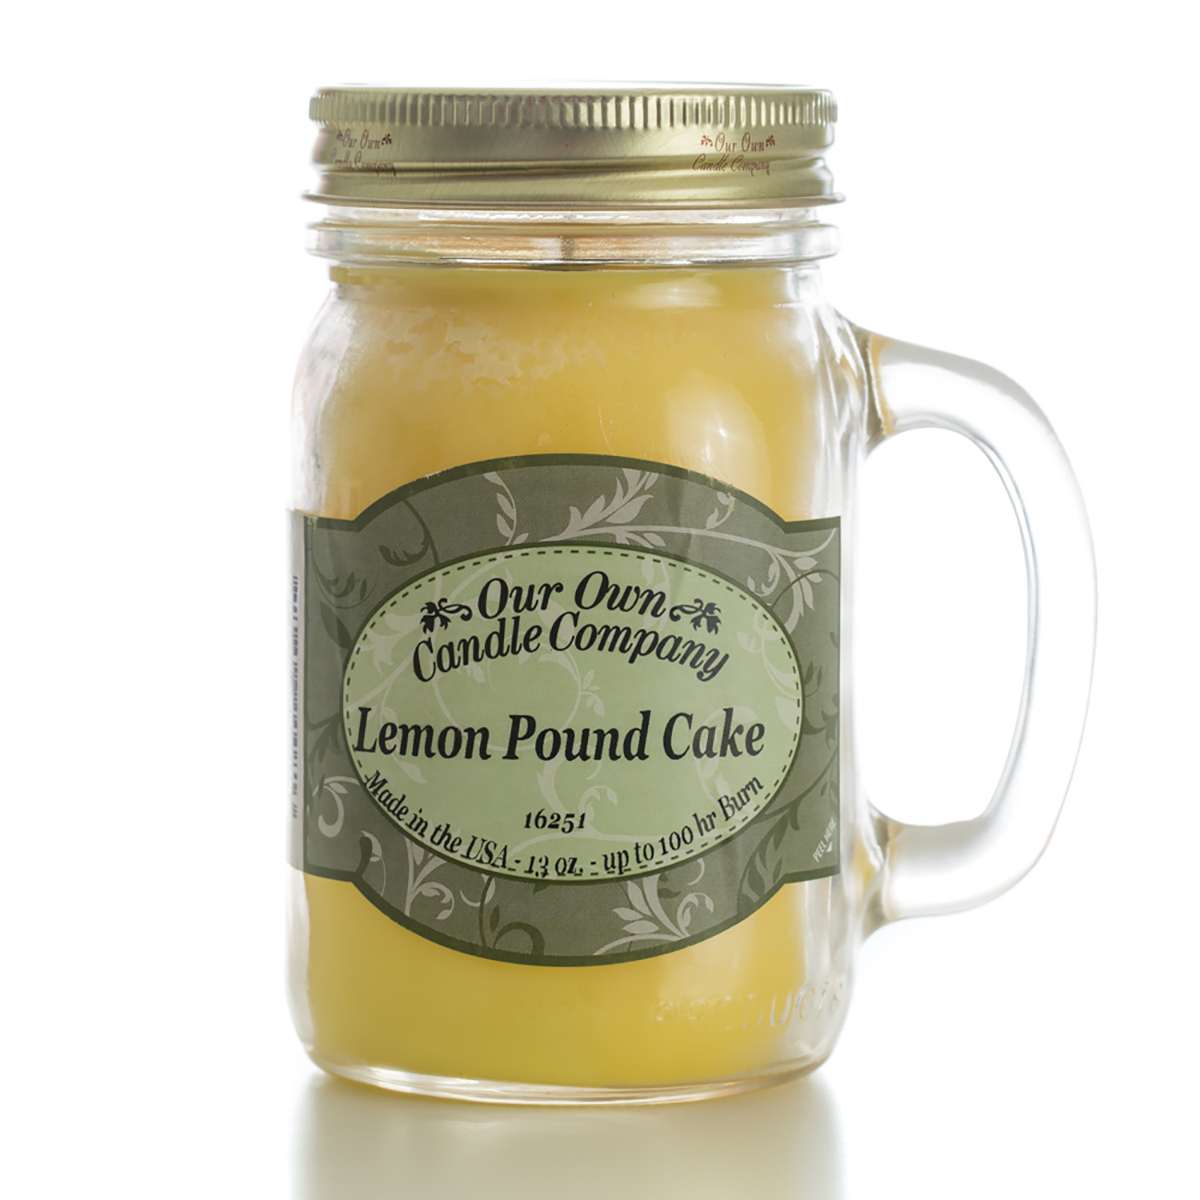 Our Own Candle Company Lemon Pound Cake 13oz. Mason Jar Candle